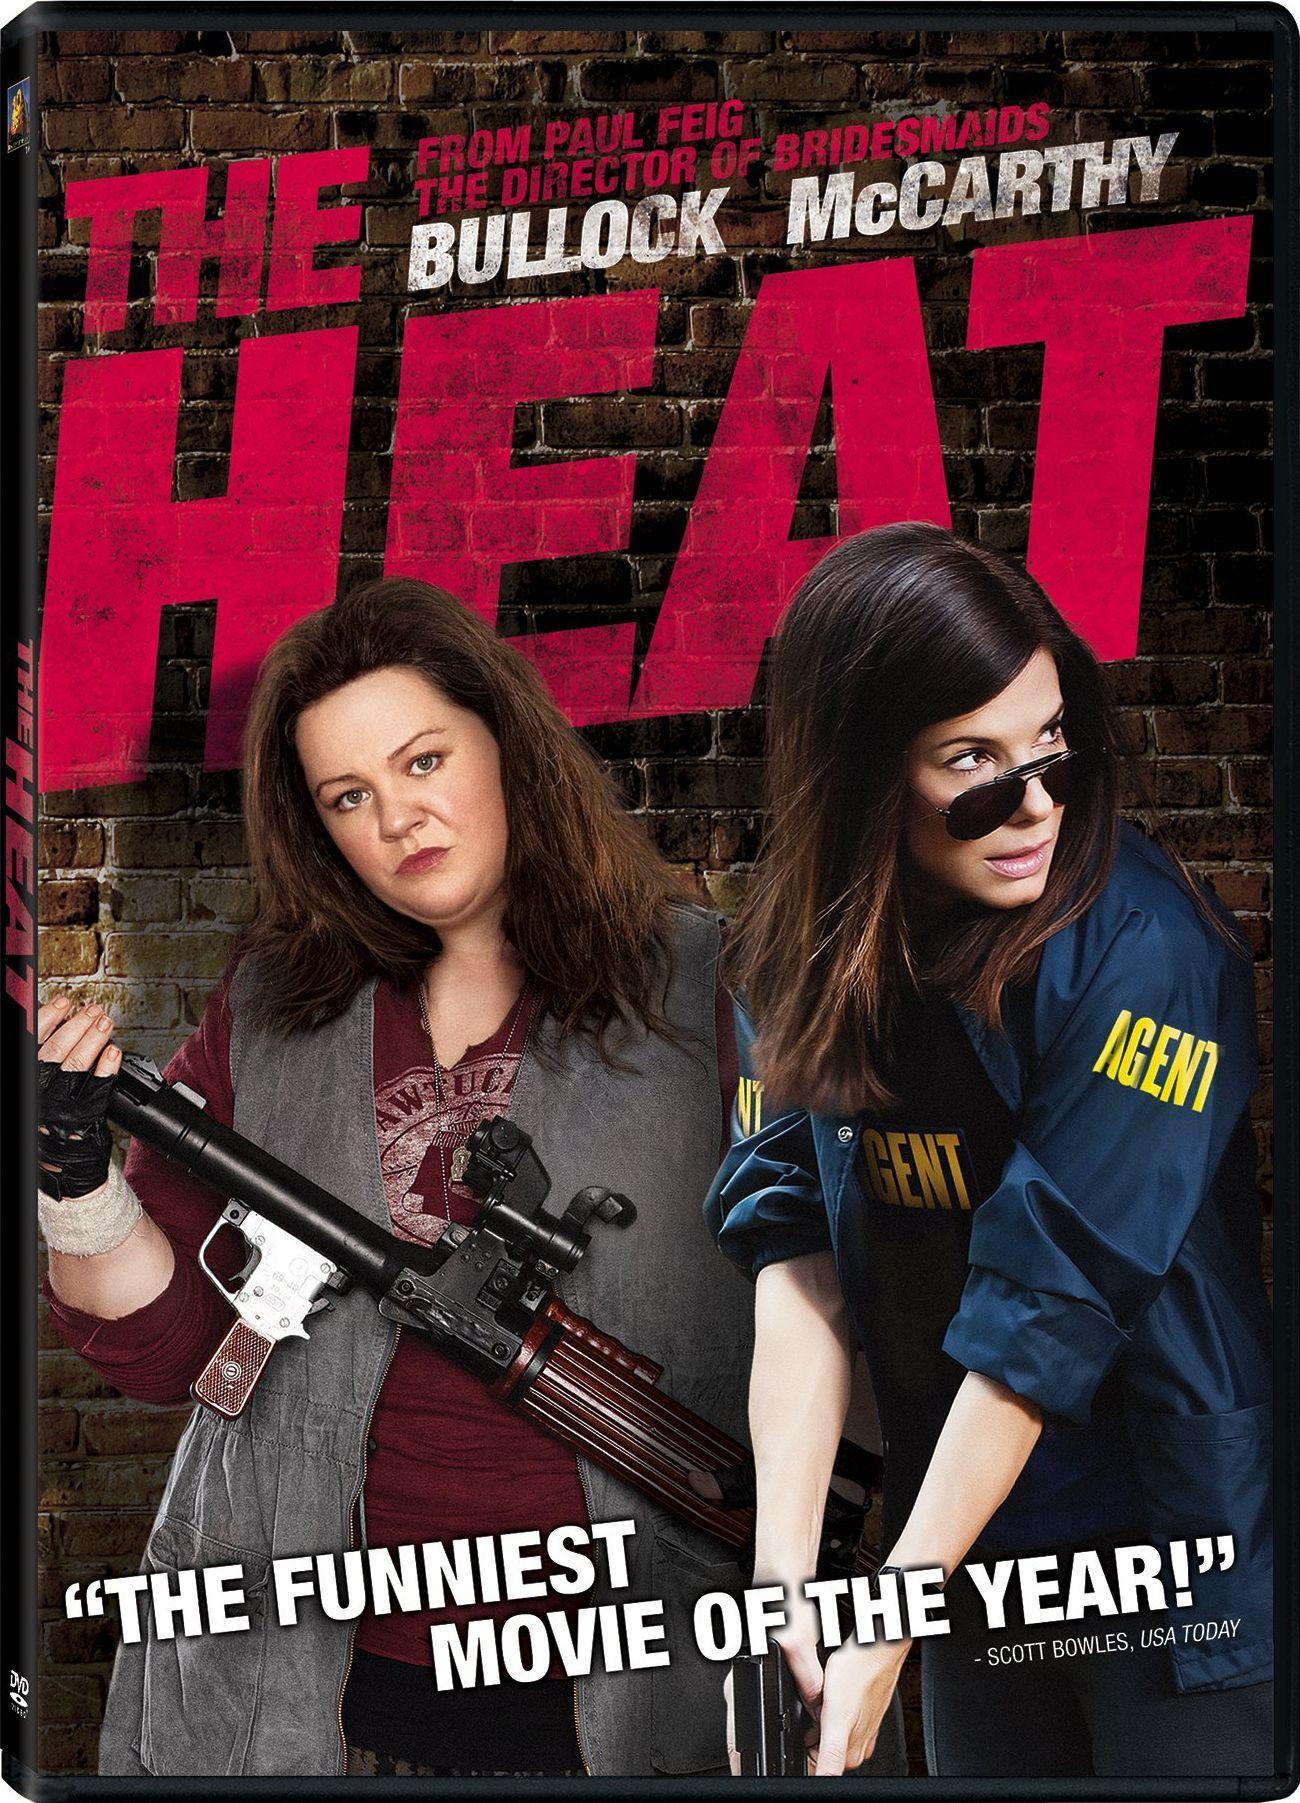 movie reviews the heat